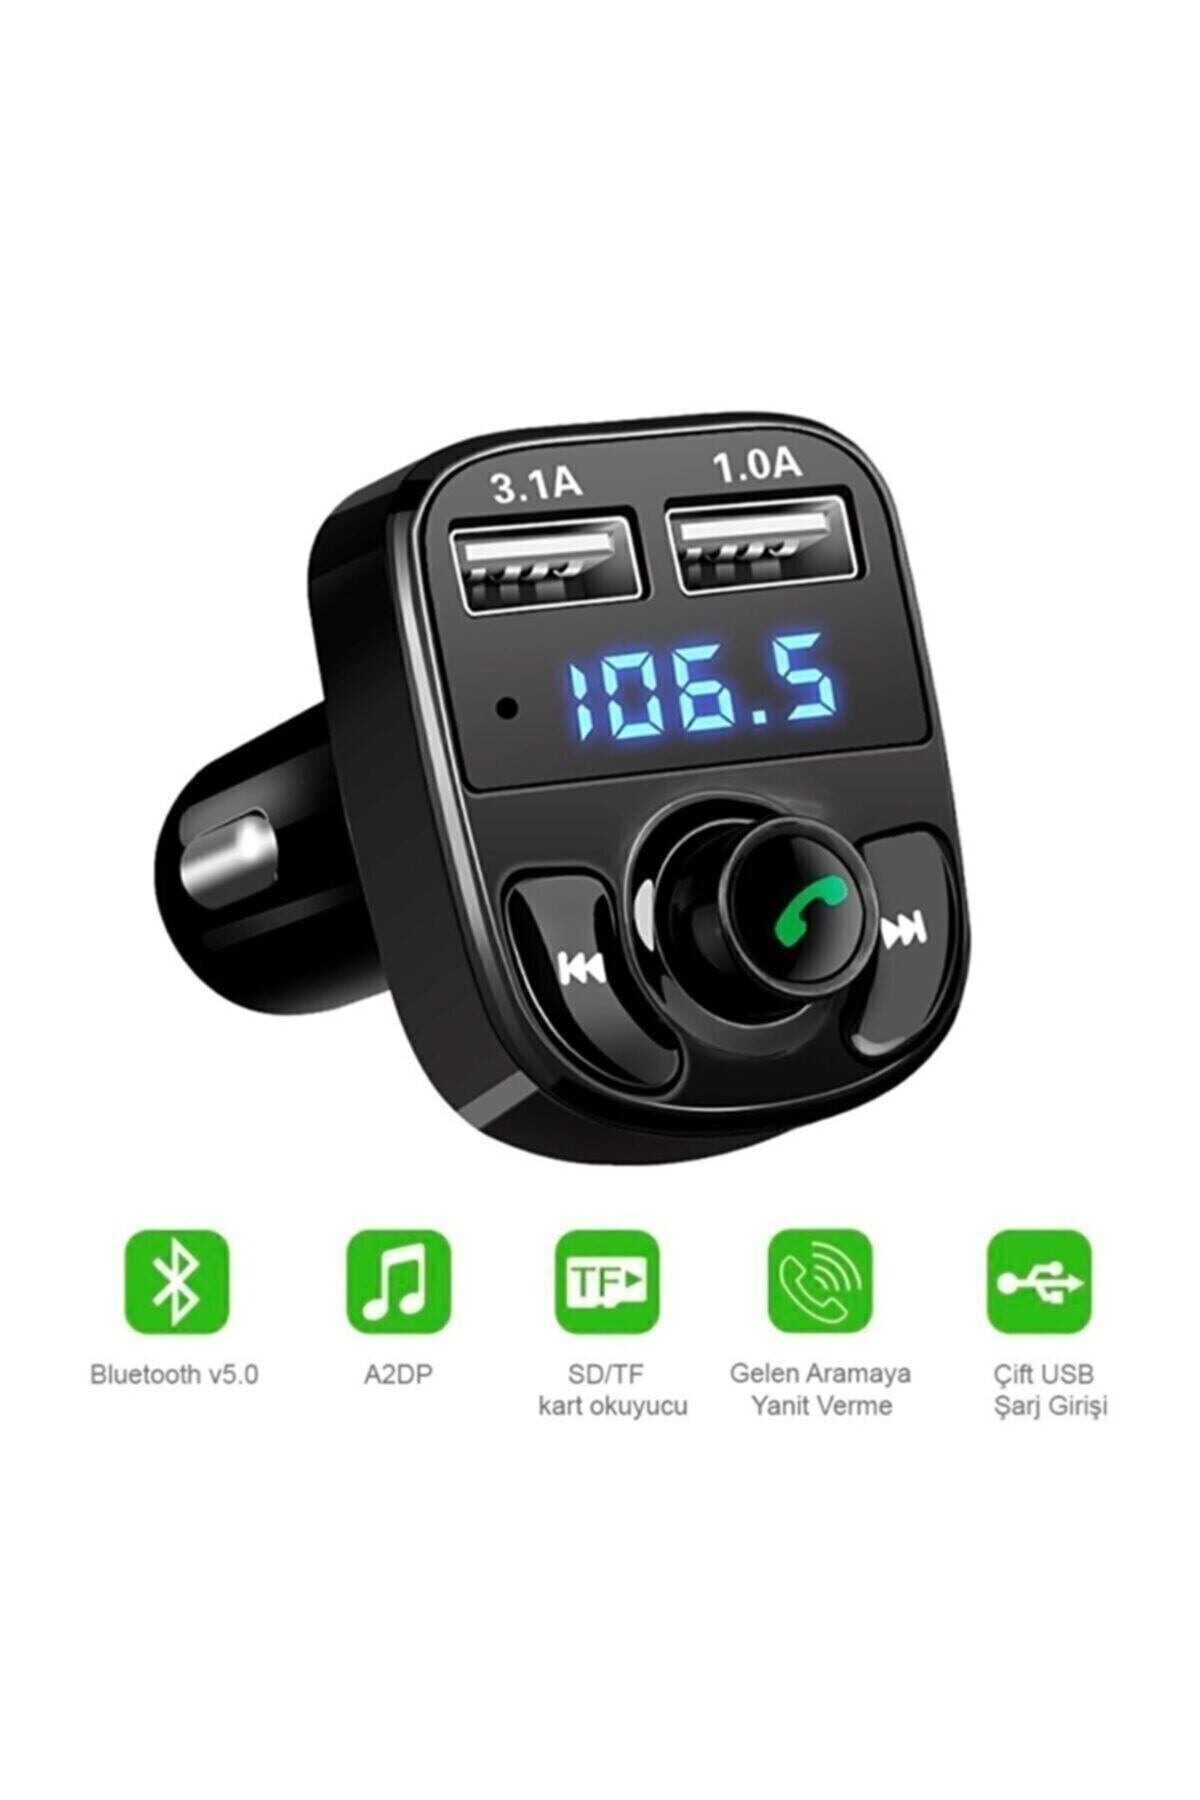 TEKNETSTORE Araç Bluetooth Fm Transmitter Cihazı Araba Mp3 Çalar Oto Çakmaklık Şarj Aleti Müzik Kiti